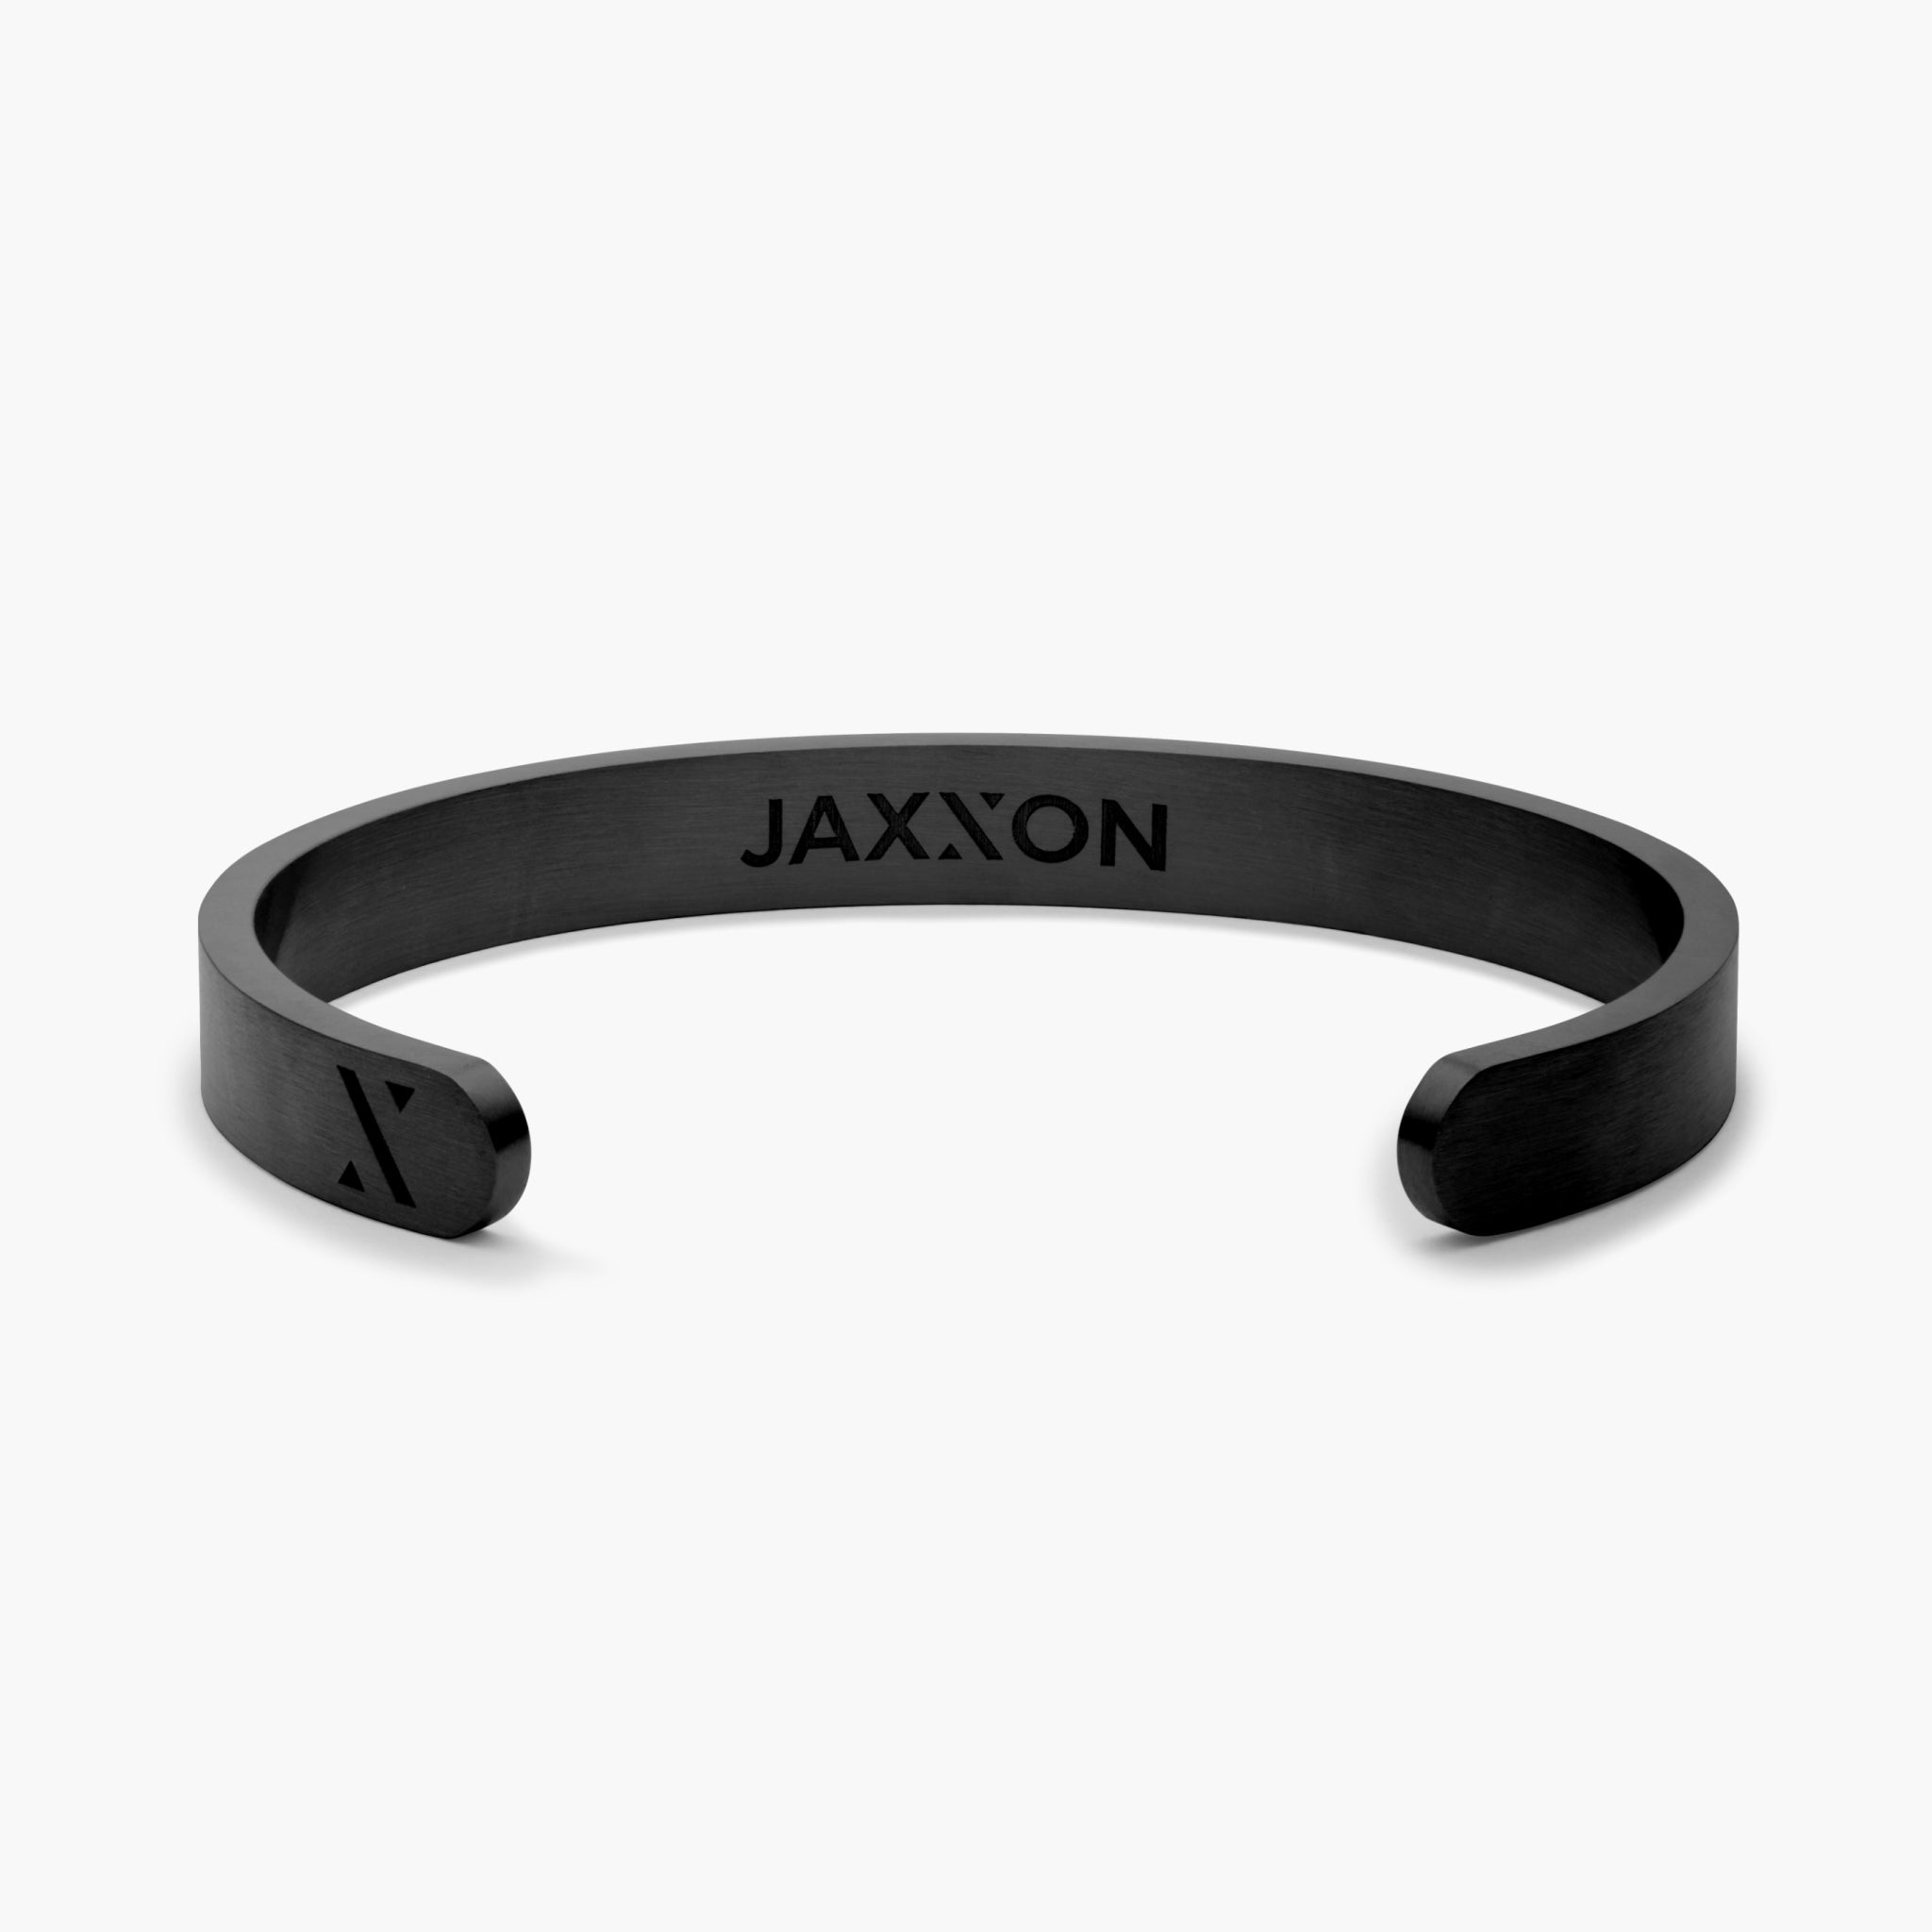 JAXXON Woven Bracelet